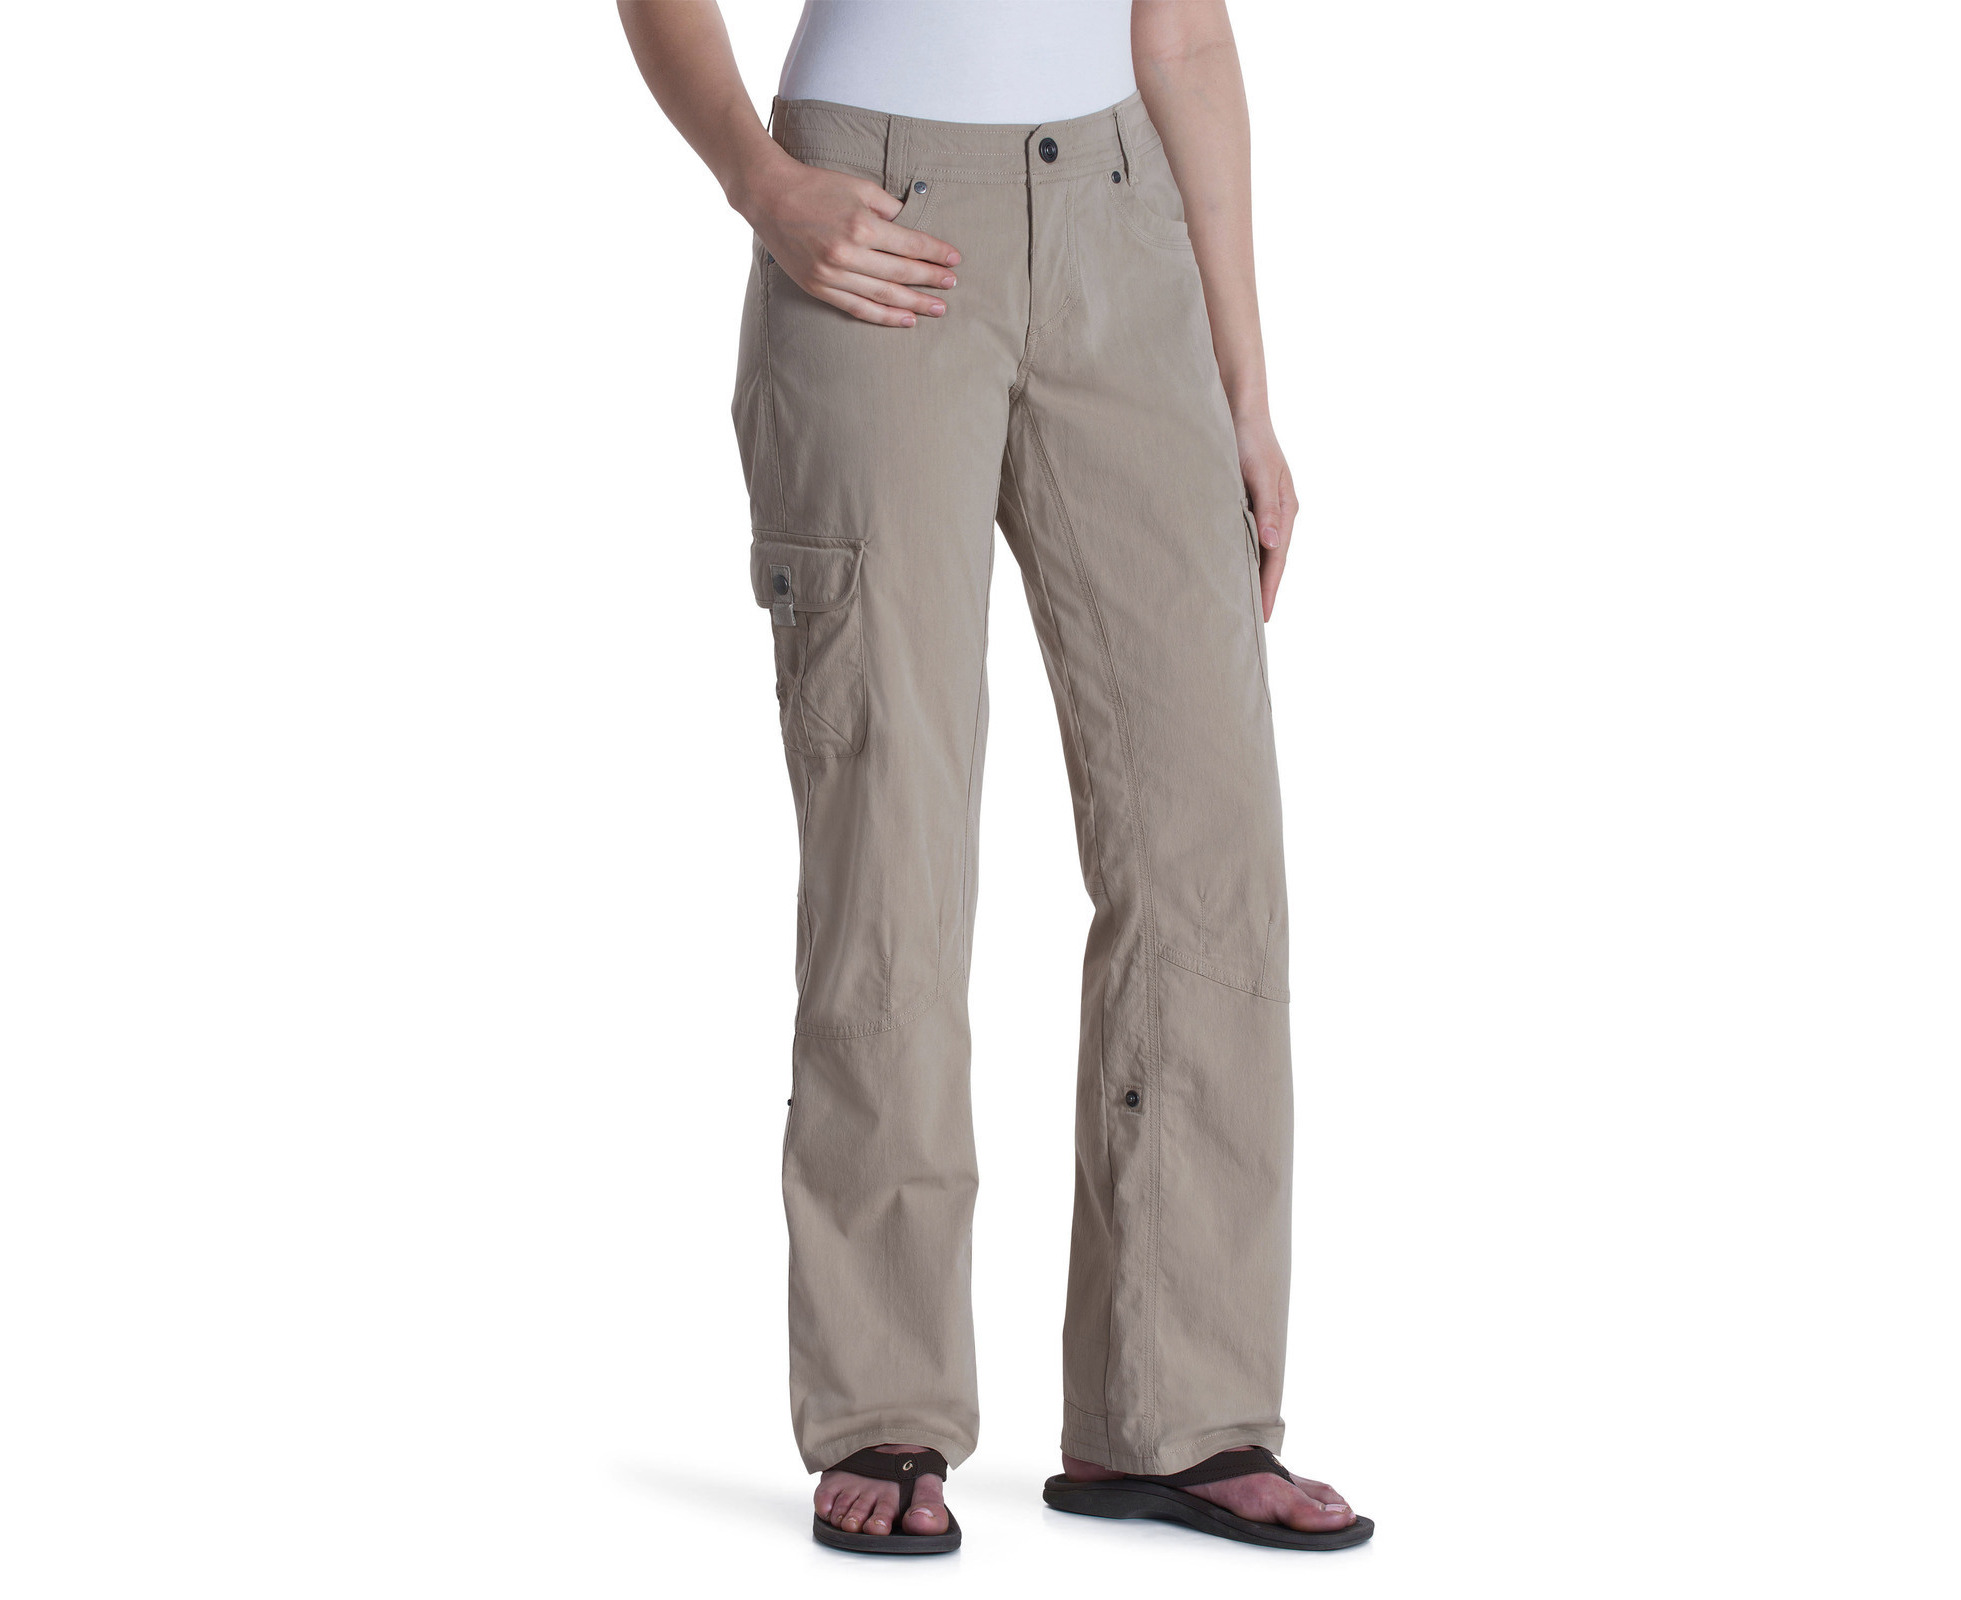 KUHL Women's Splash Roll Up Pants 32 Inseam Convertible Trousers